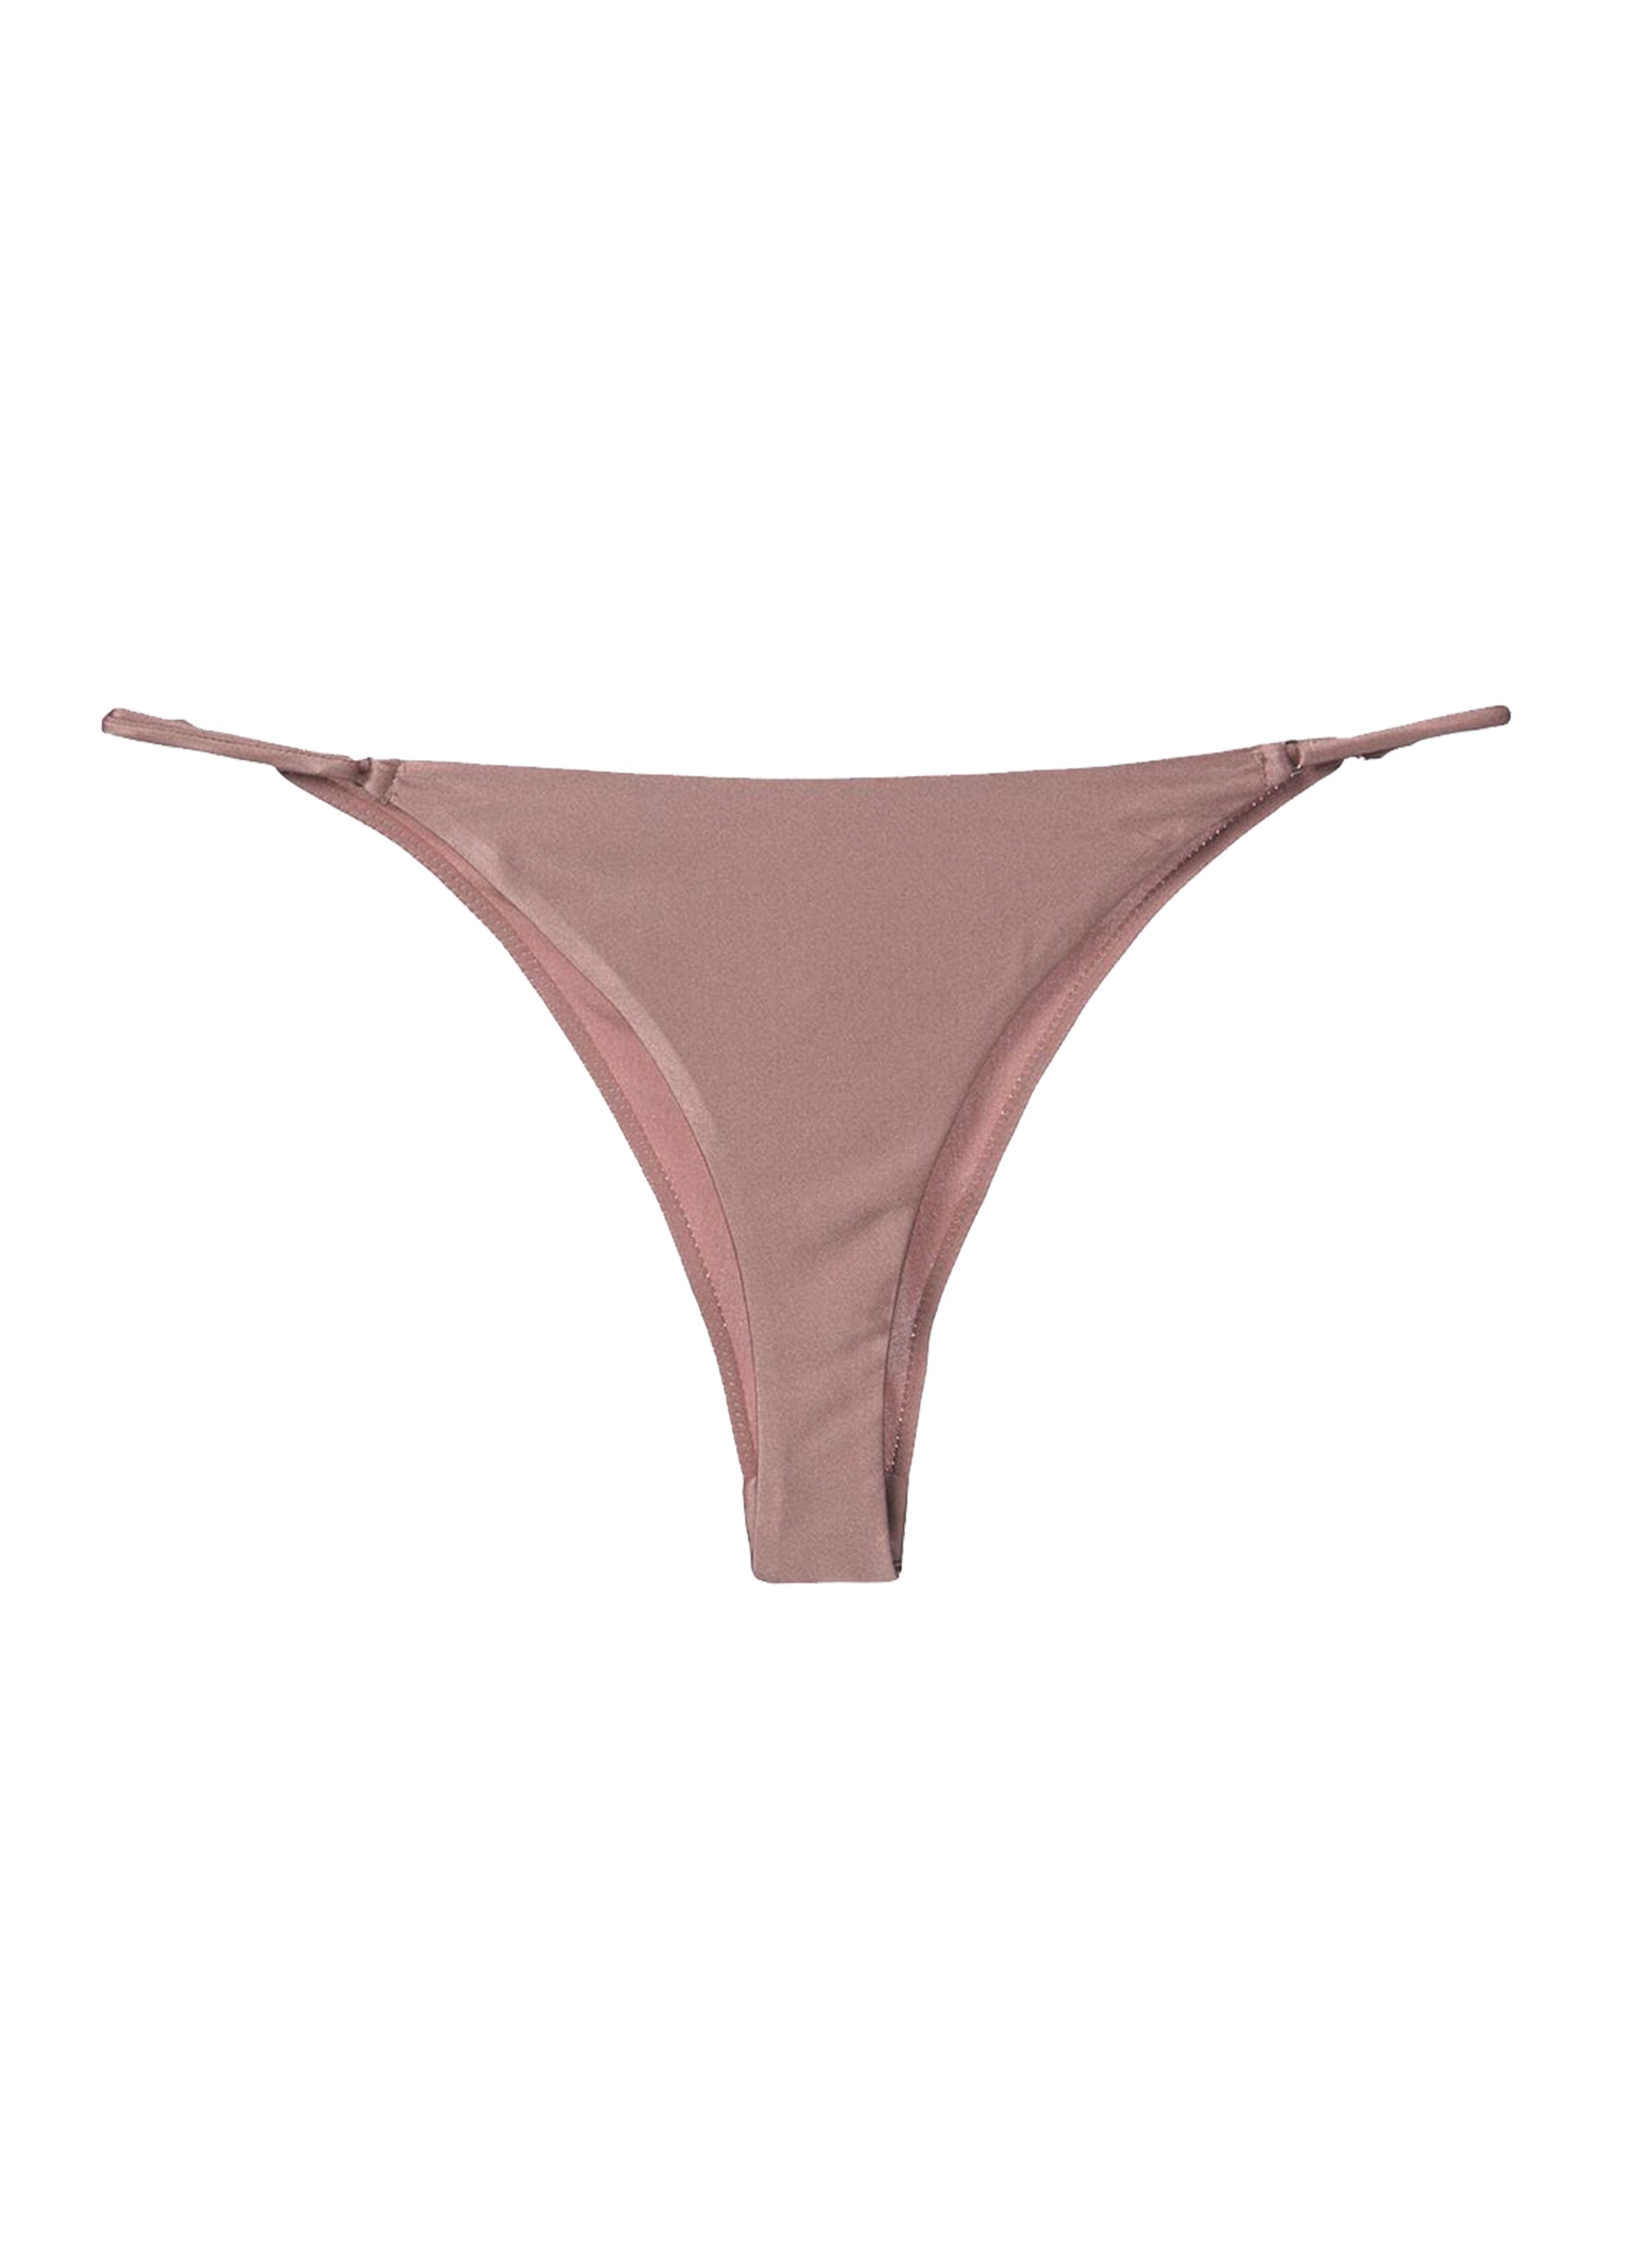 Charlotte Lace Seamless Cheeky Underwear - FLEUR DU MAL